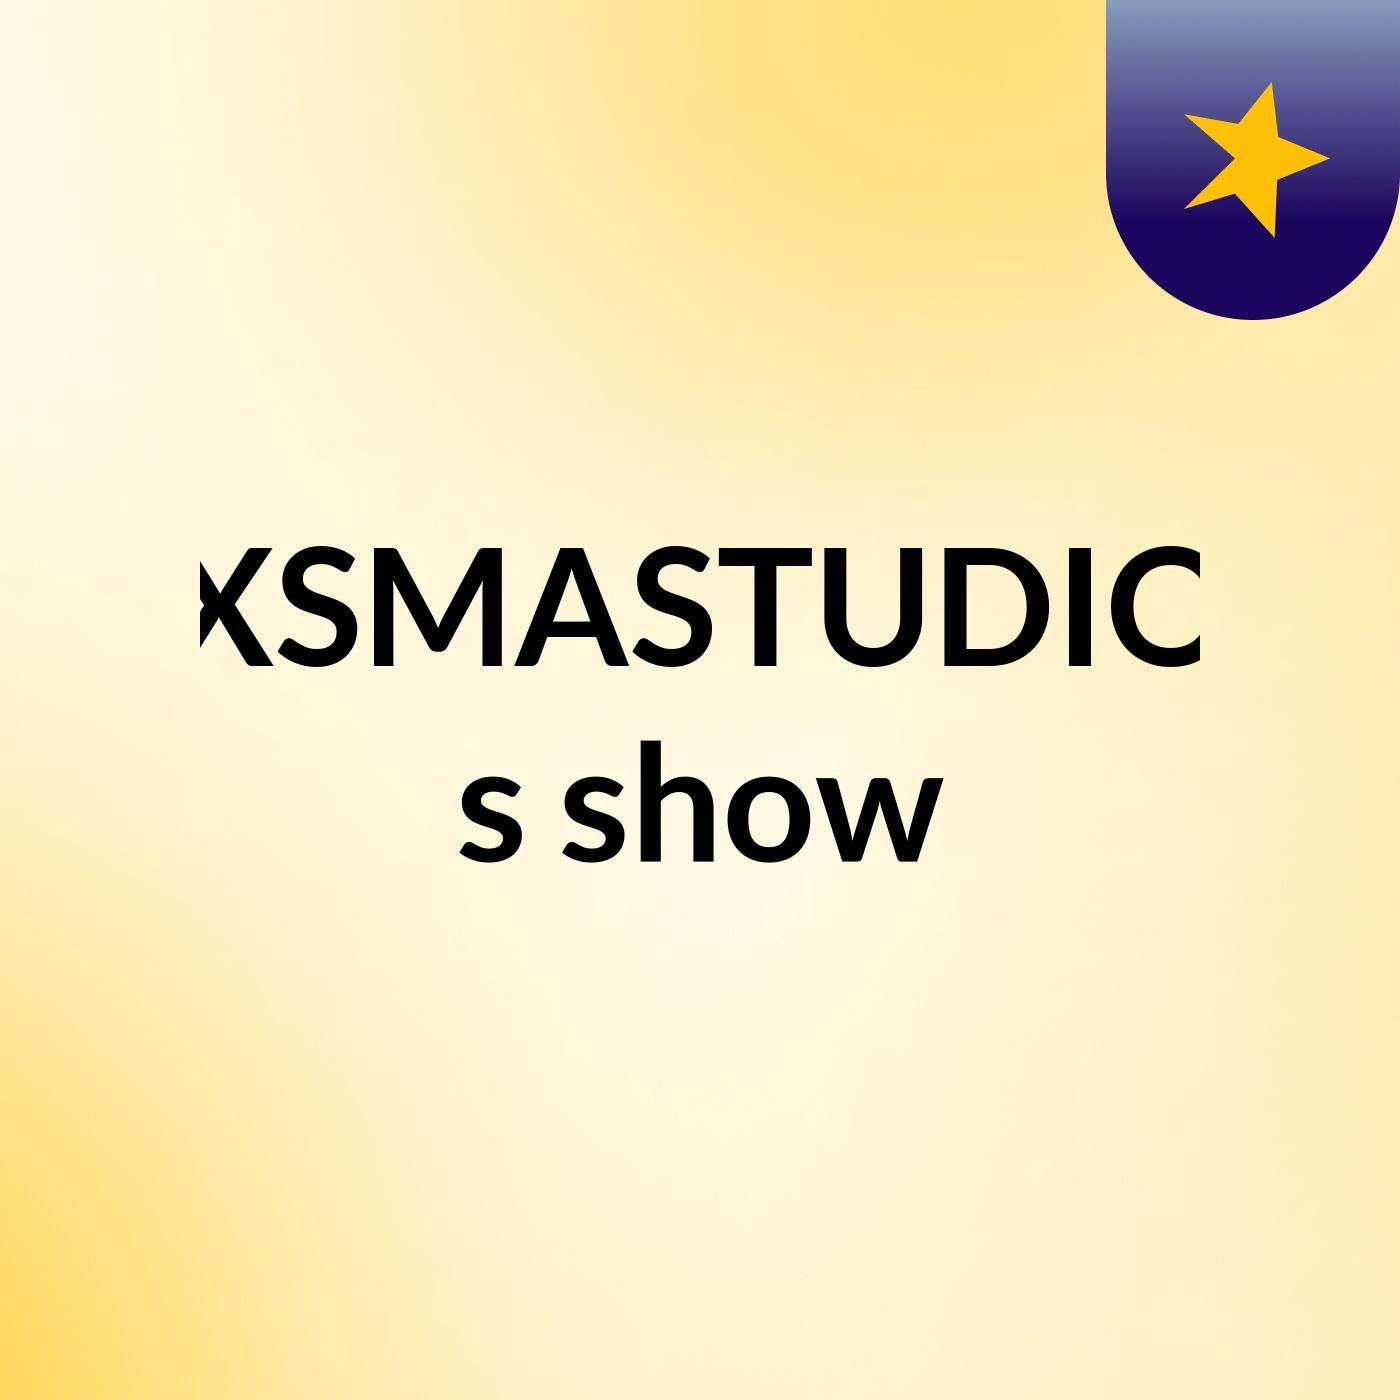 XSMASTUDIO's show